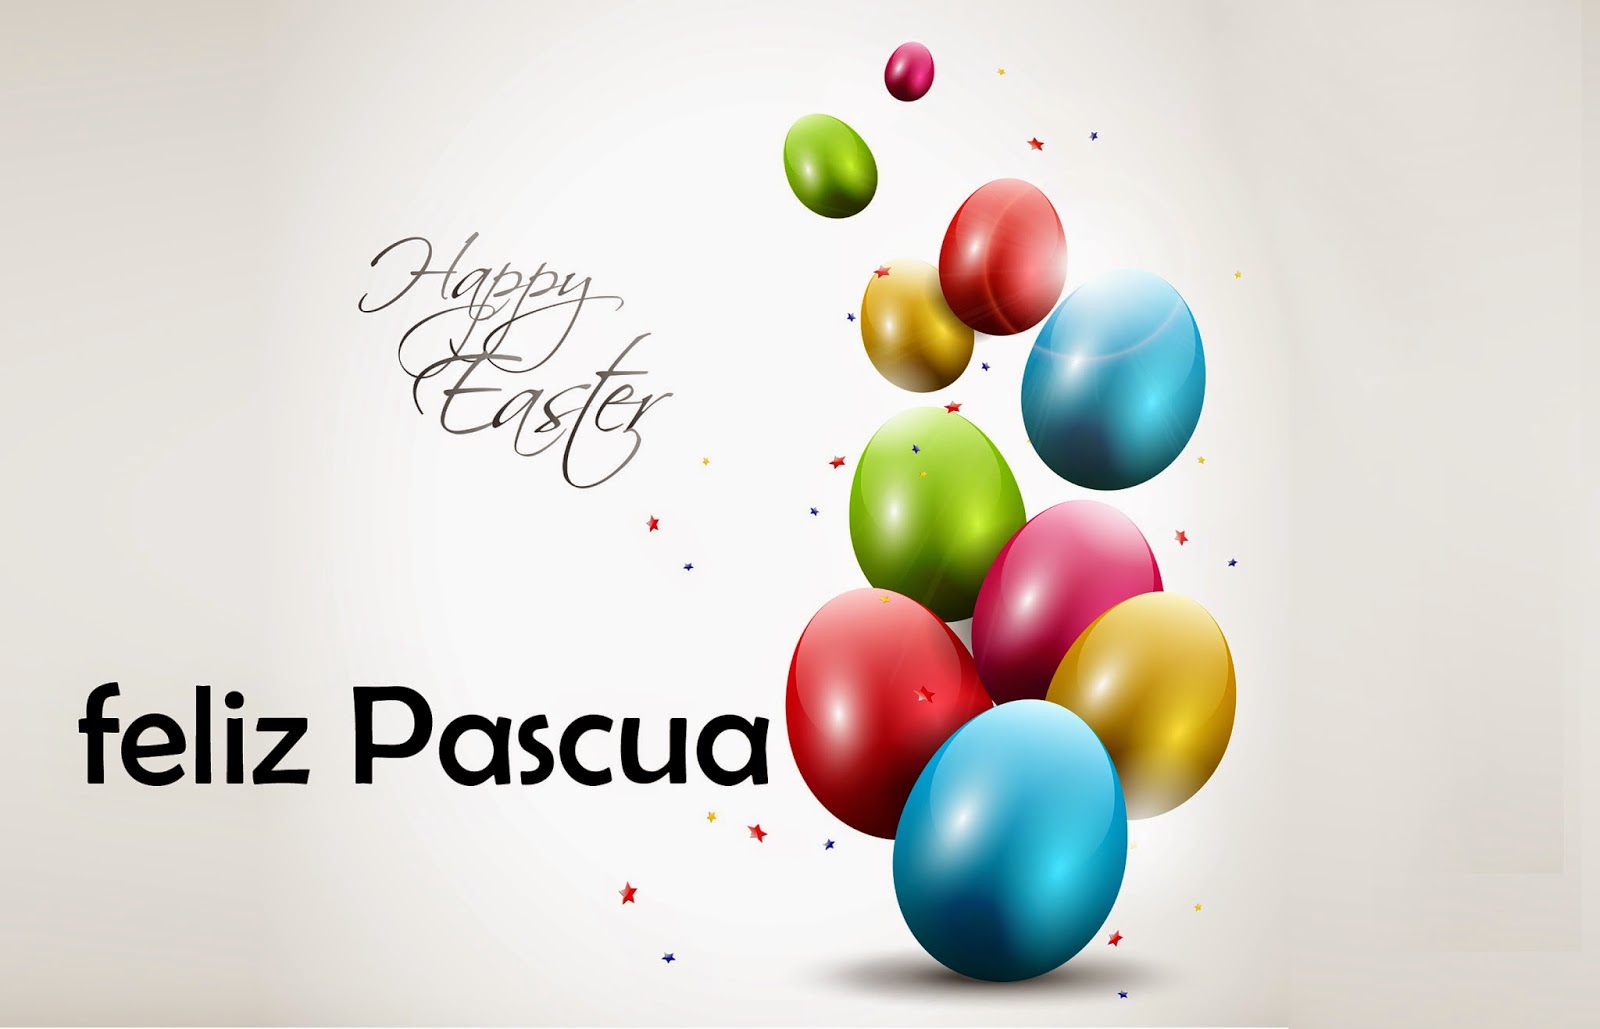 Happy Easter 2015 Eggs Images Wish in spanish- Feliz Pascoa 2015 ...